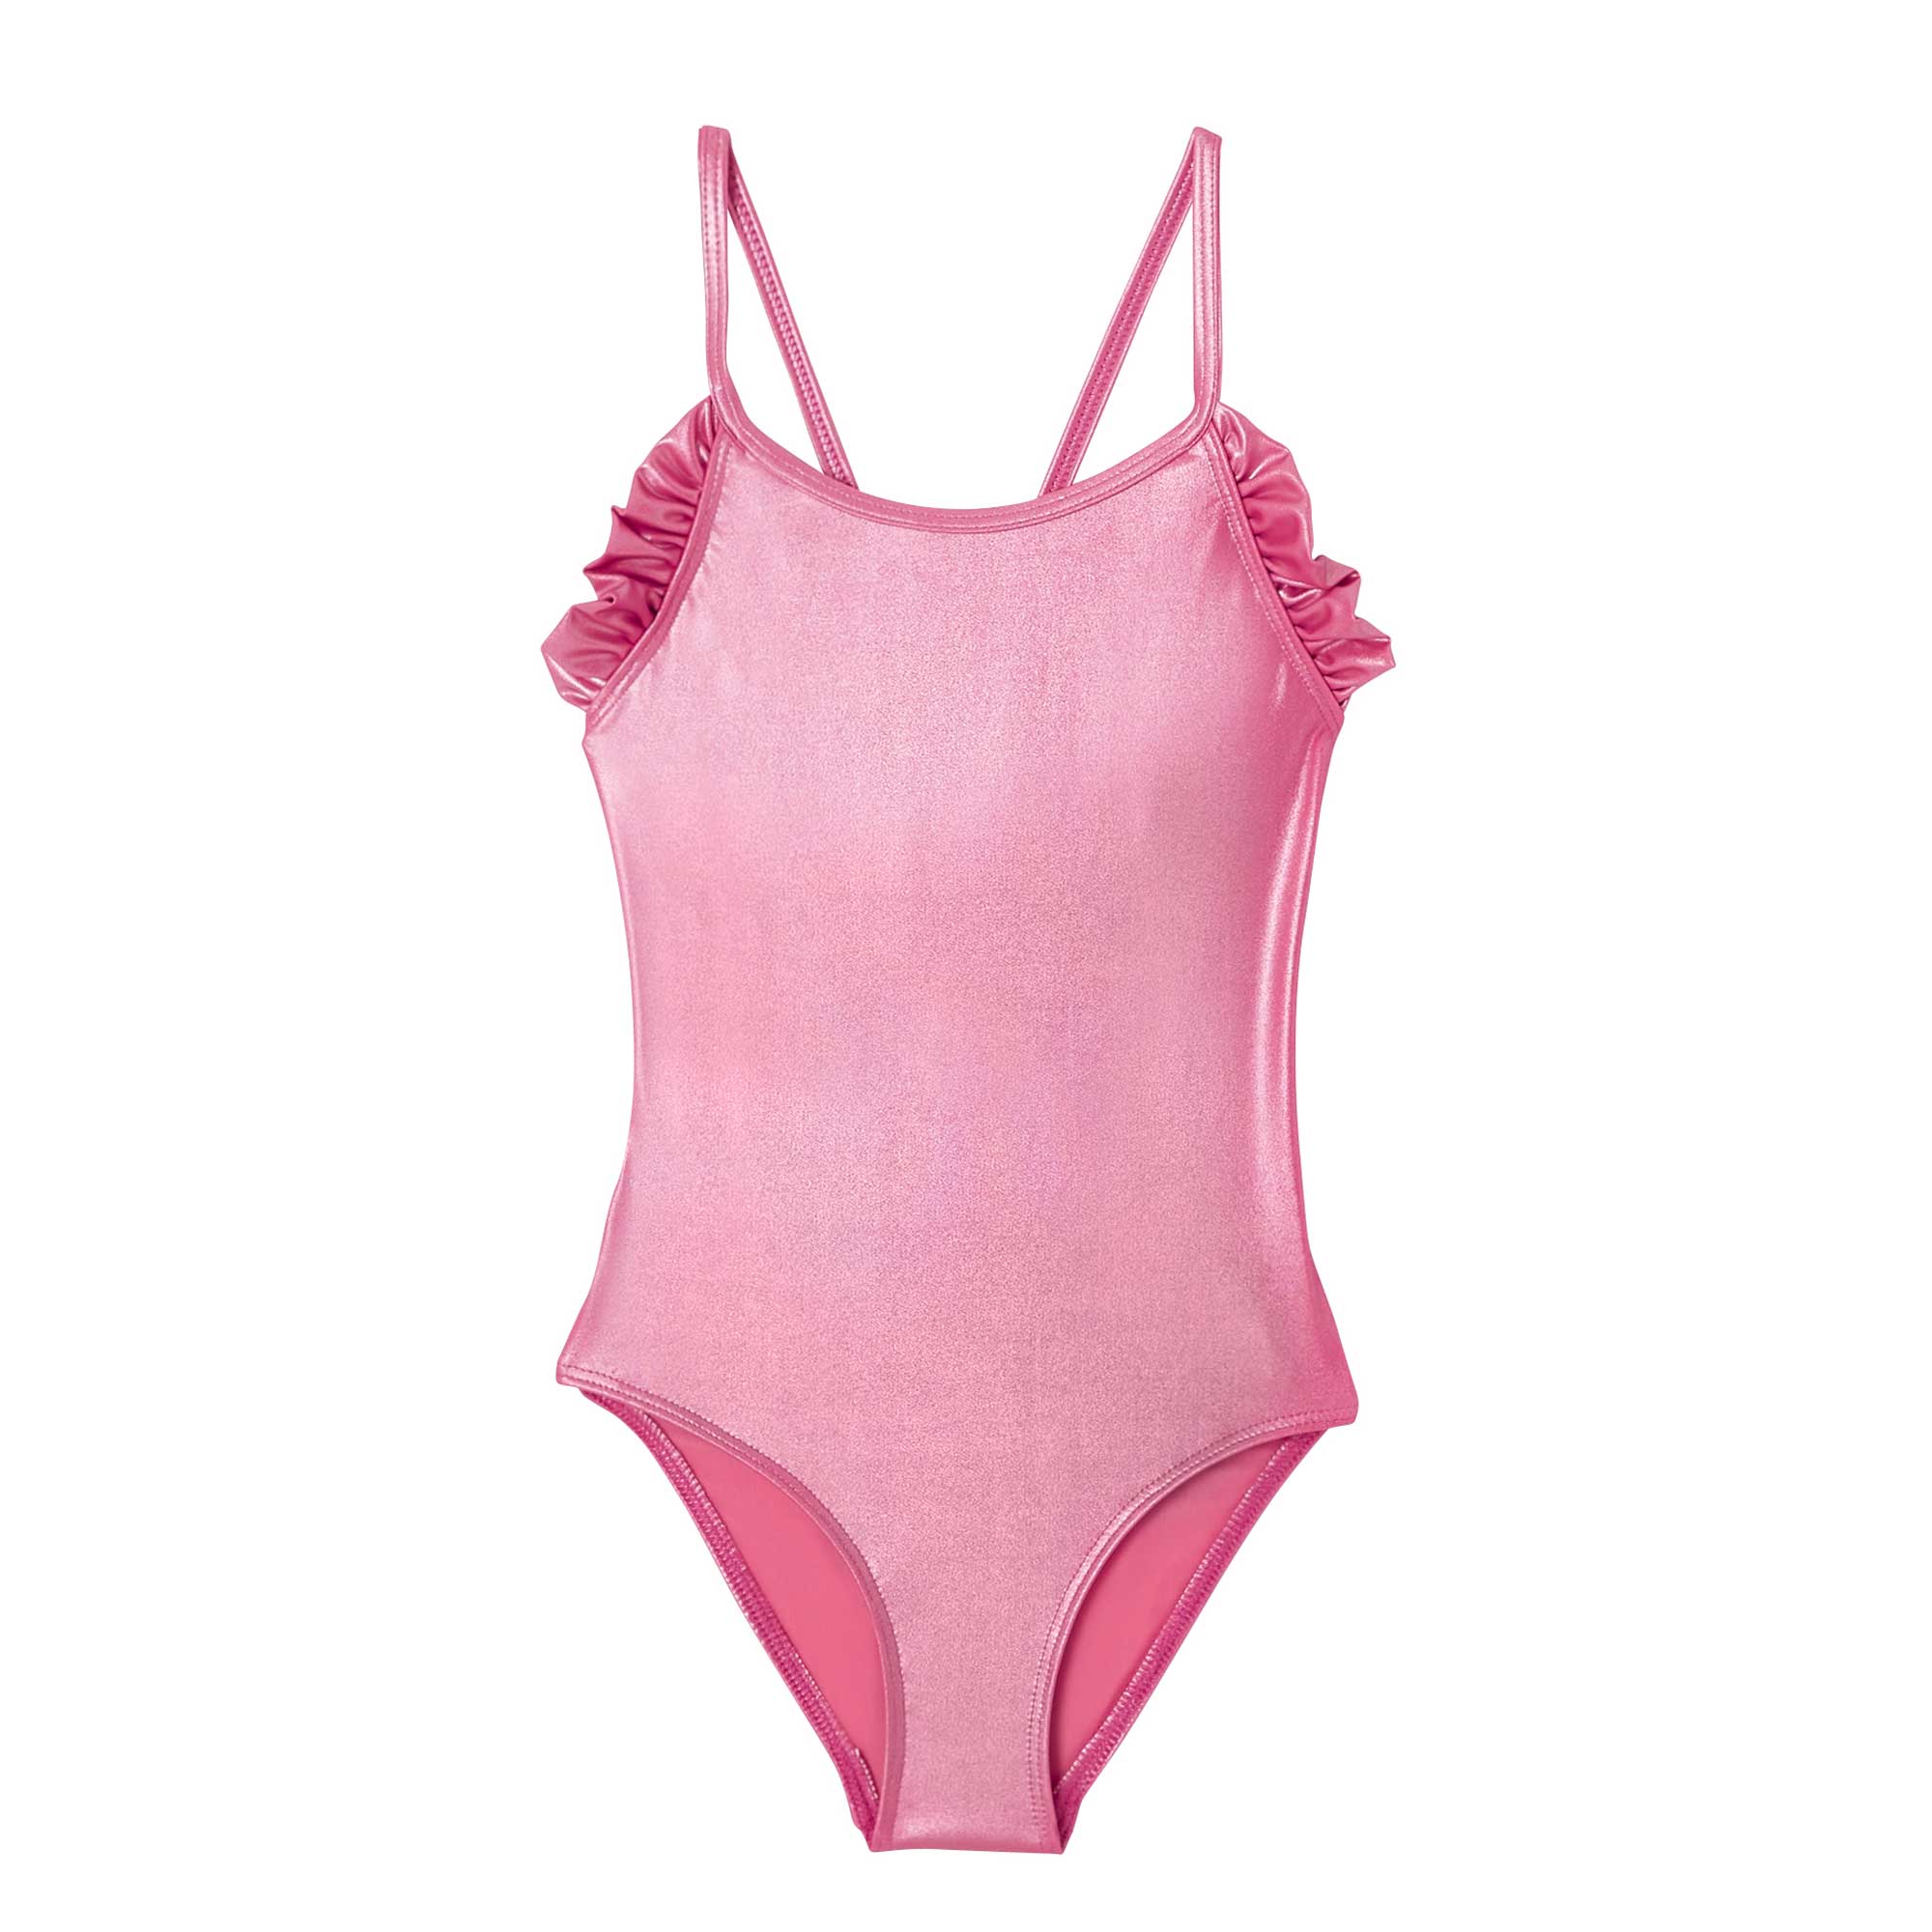 One-piece pink iridescent swimsuit